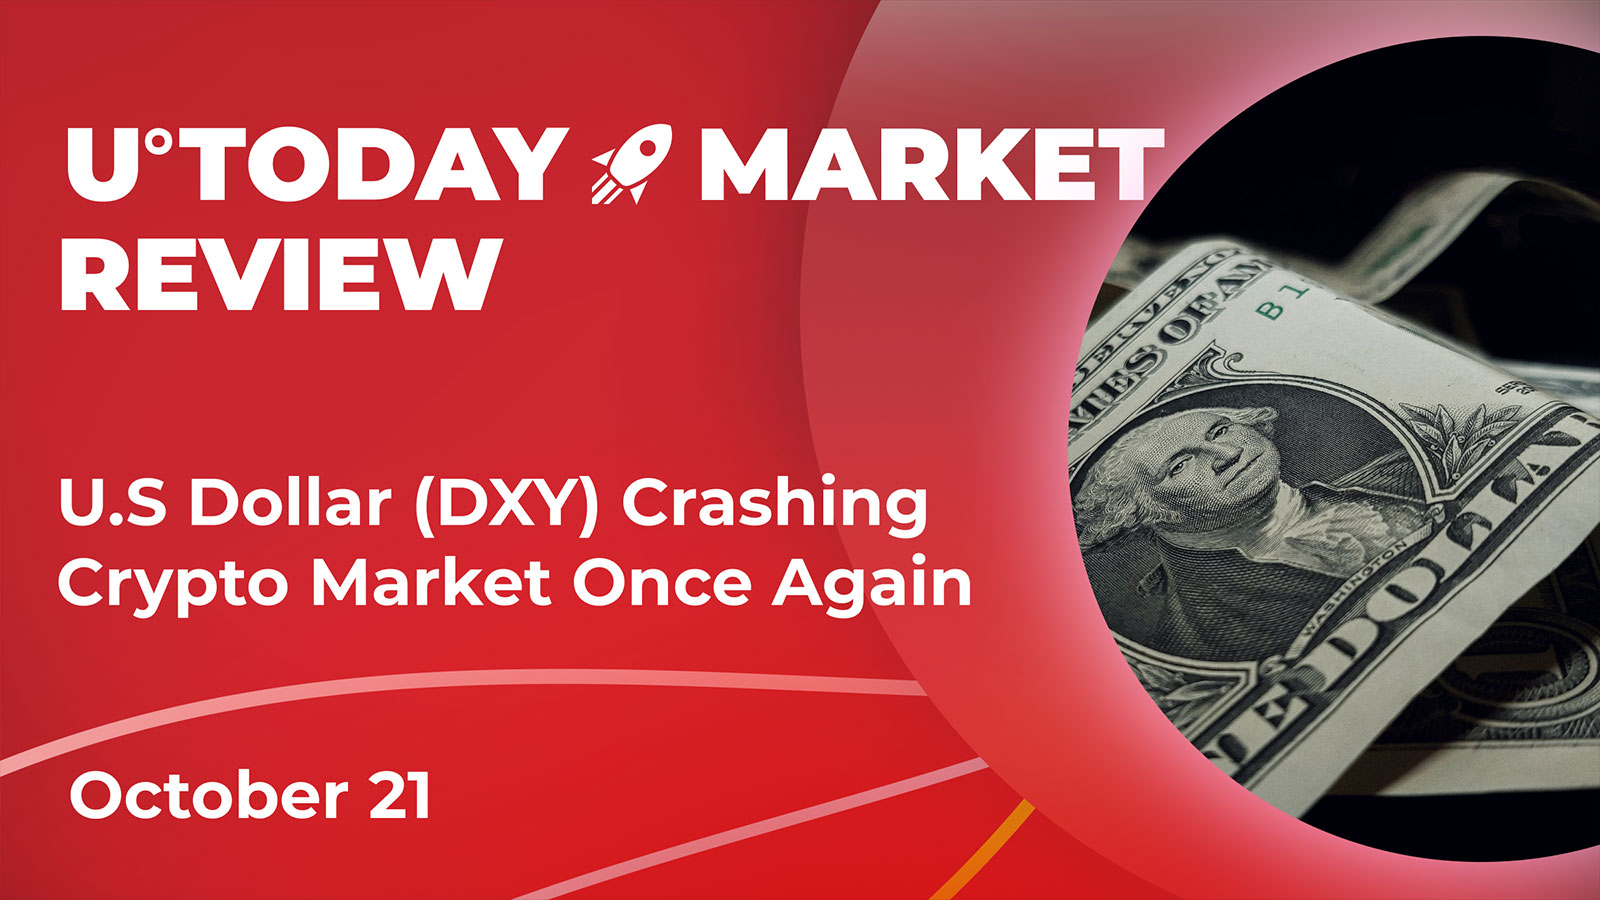 U.S Dollar (DXY) Crashing Crypto Market Once Again: Crypto Market Review, October 21